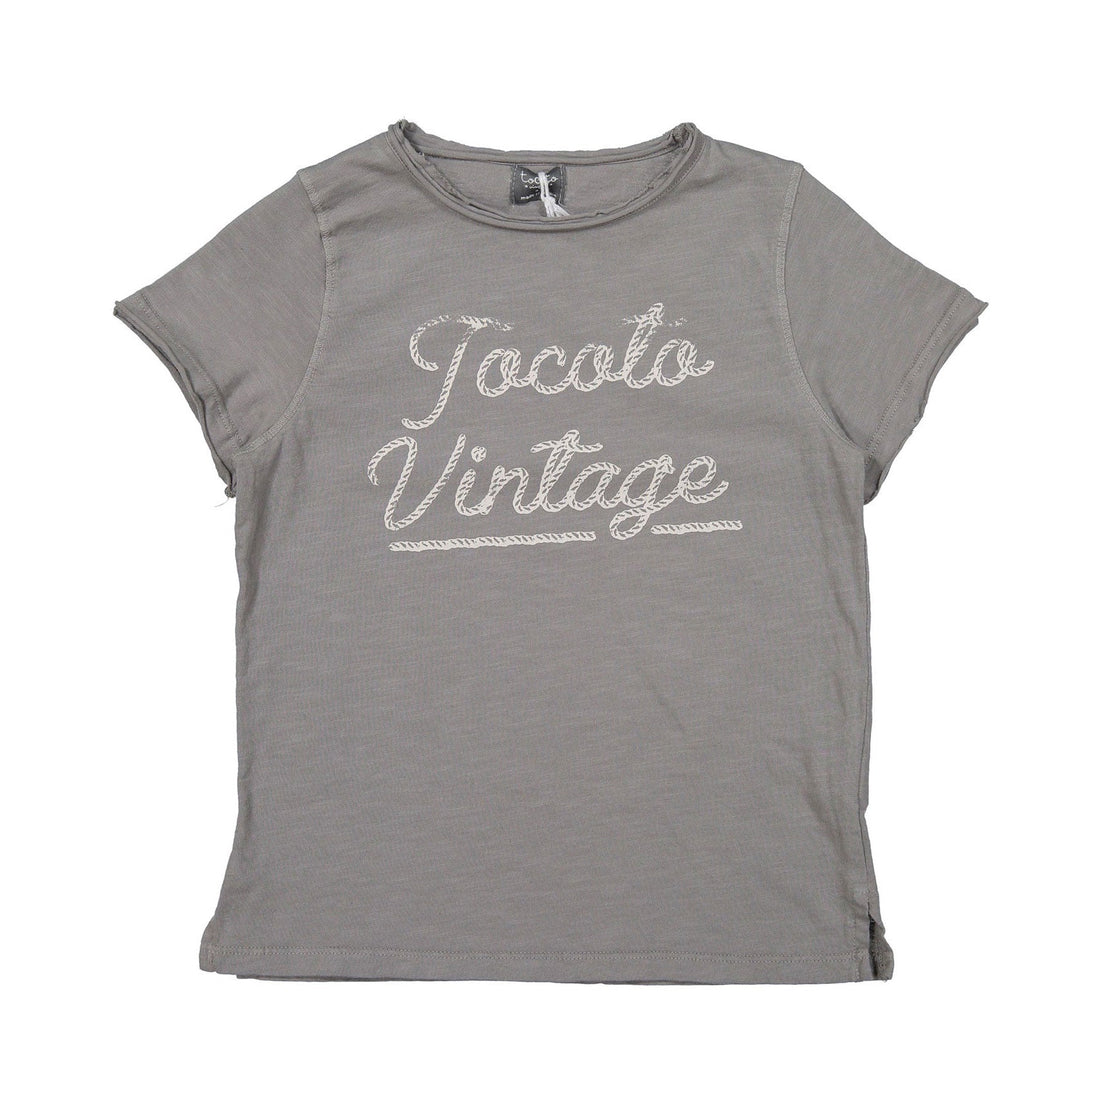 Tocoto Vintage tees 3 Tocoto Vintage Grey Logo T-shirt